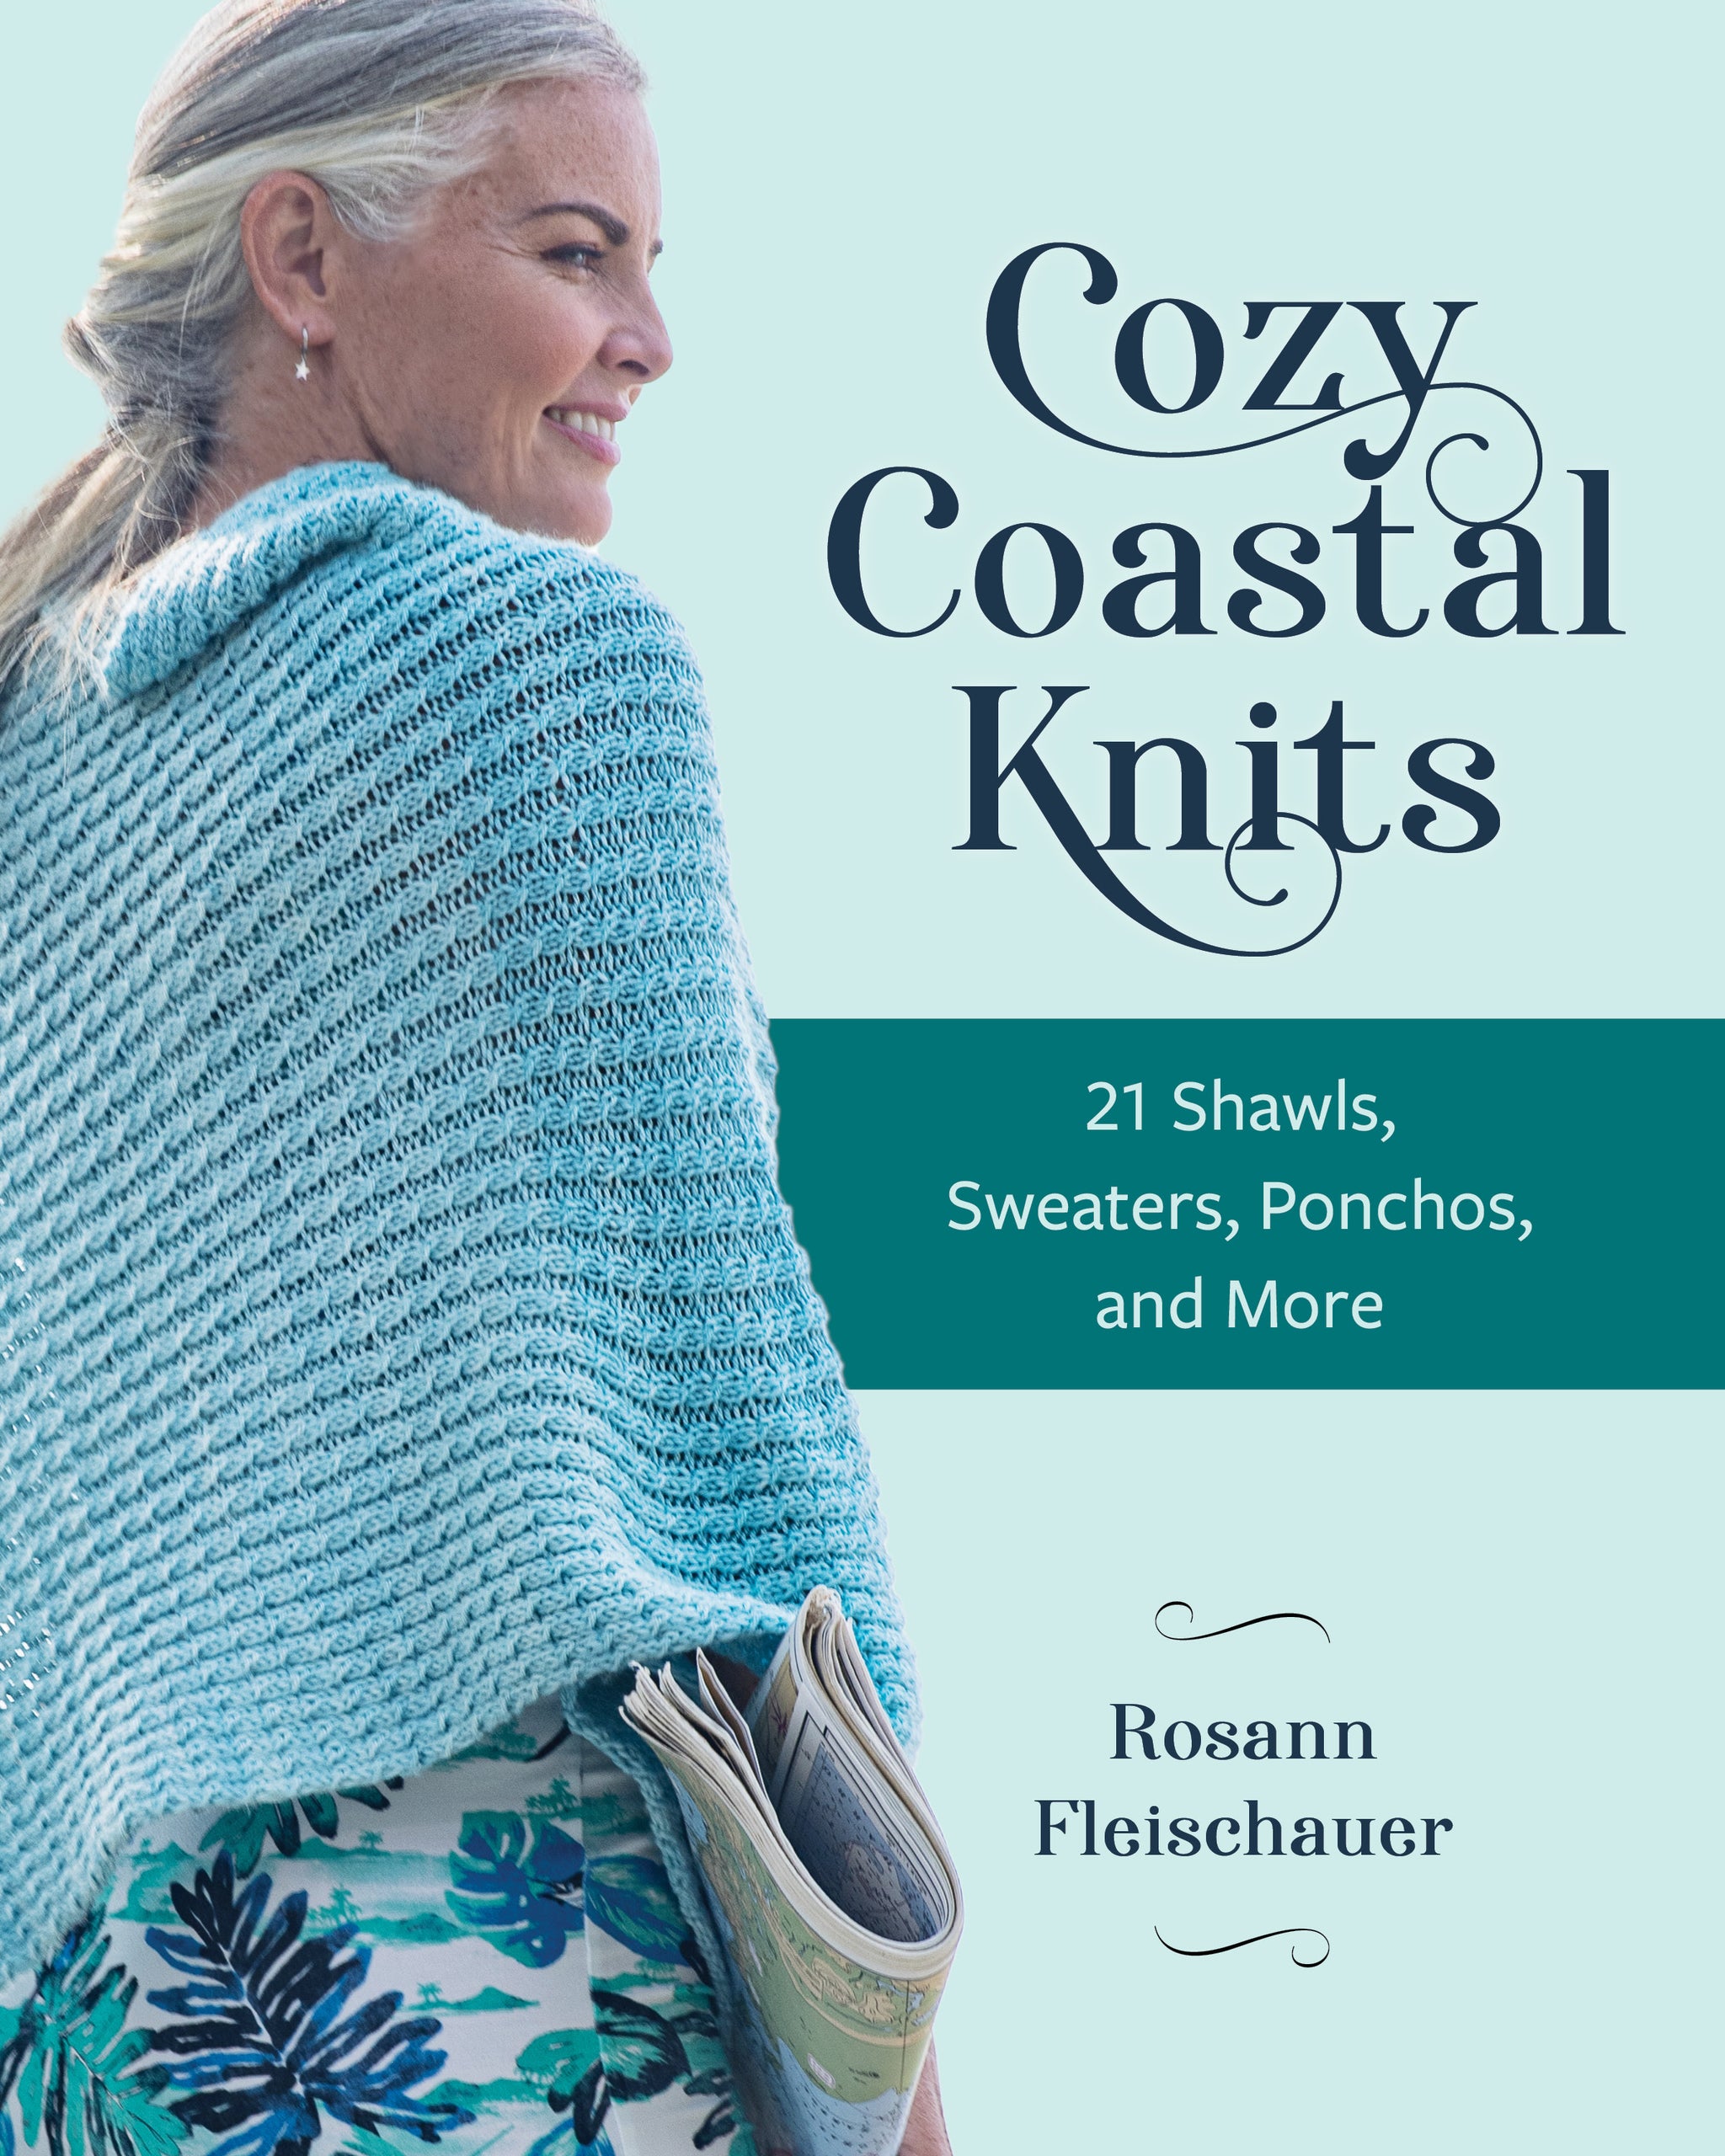 Cozy Coastal Knits (Book) Rosann Fleischauer - PREORDER SIGNED COPY